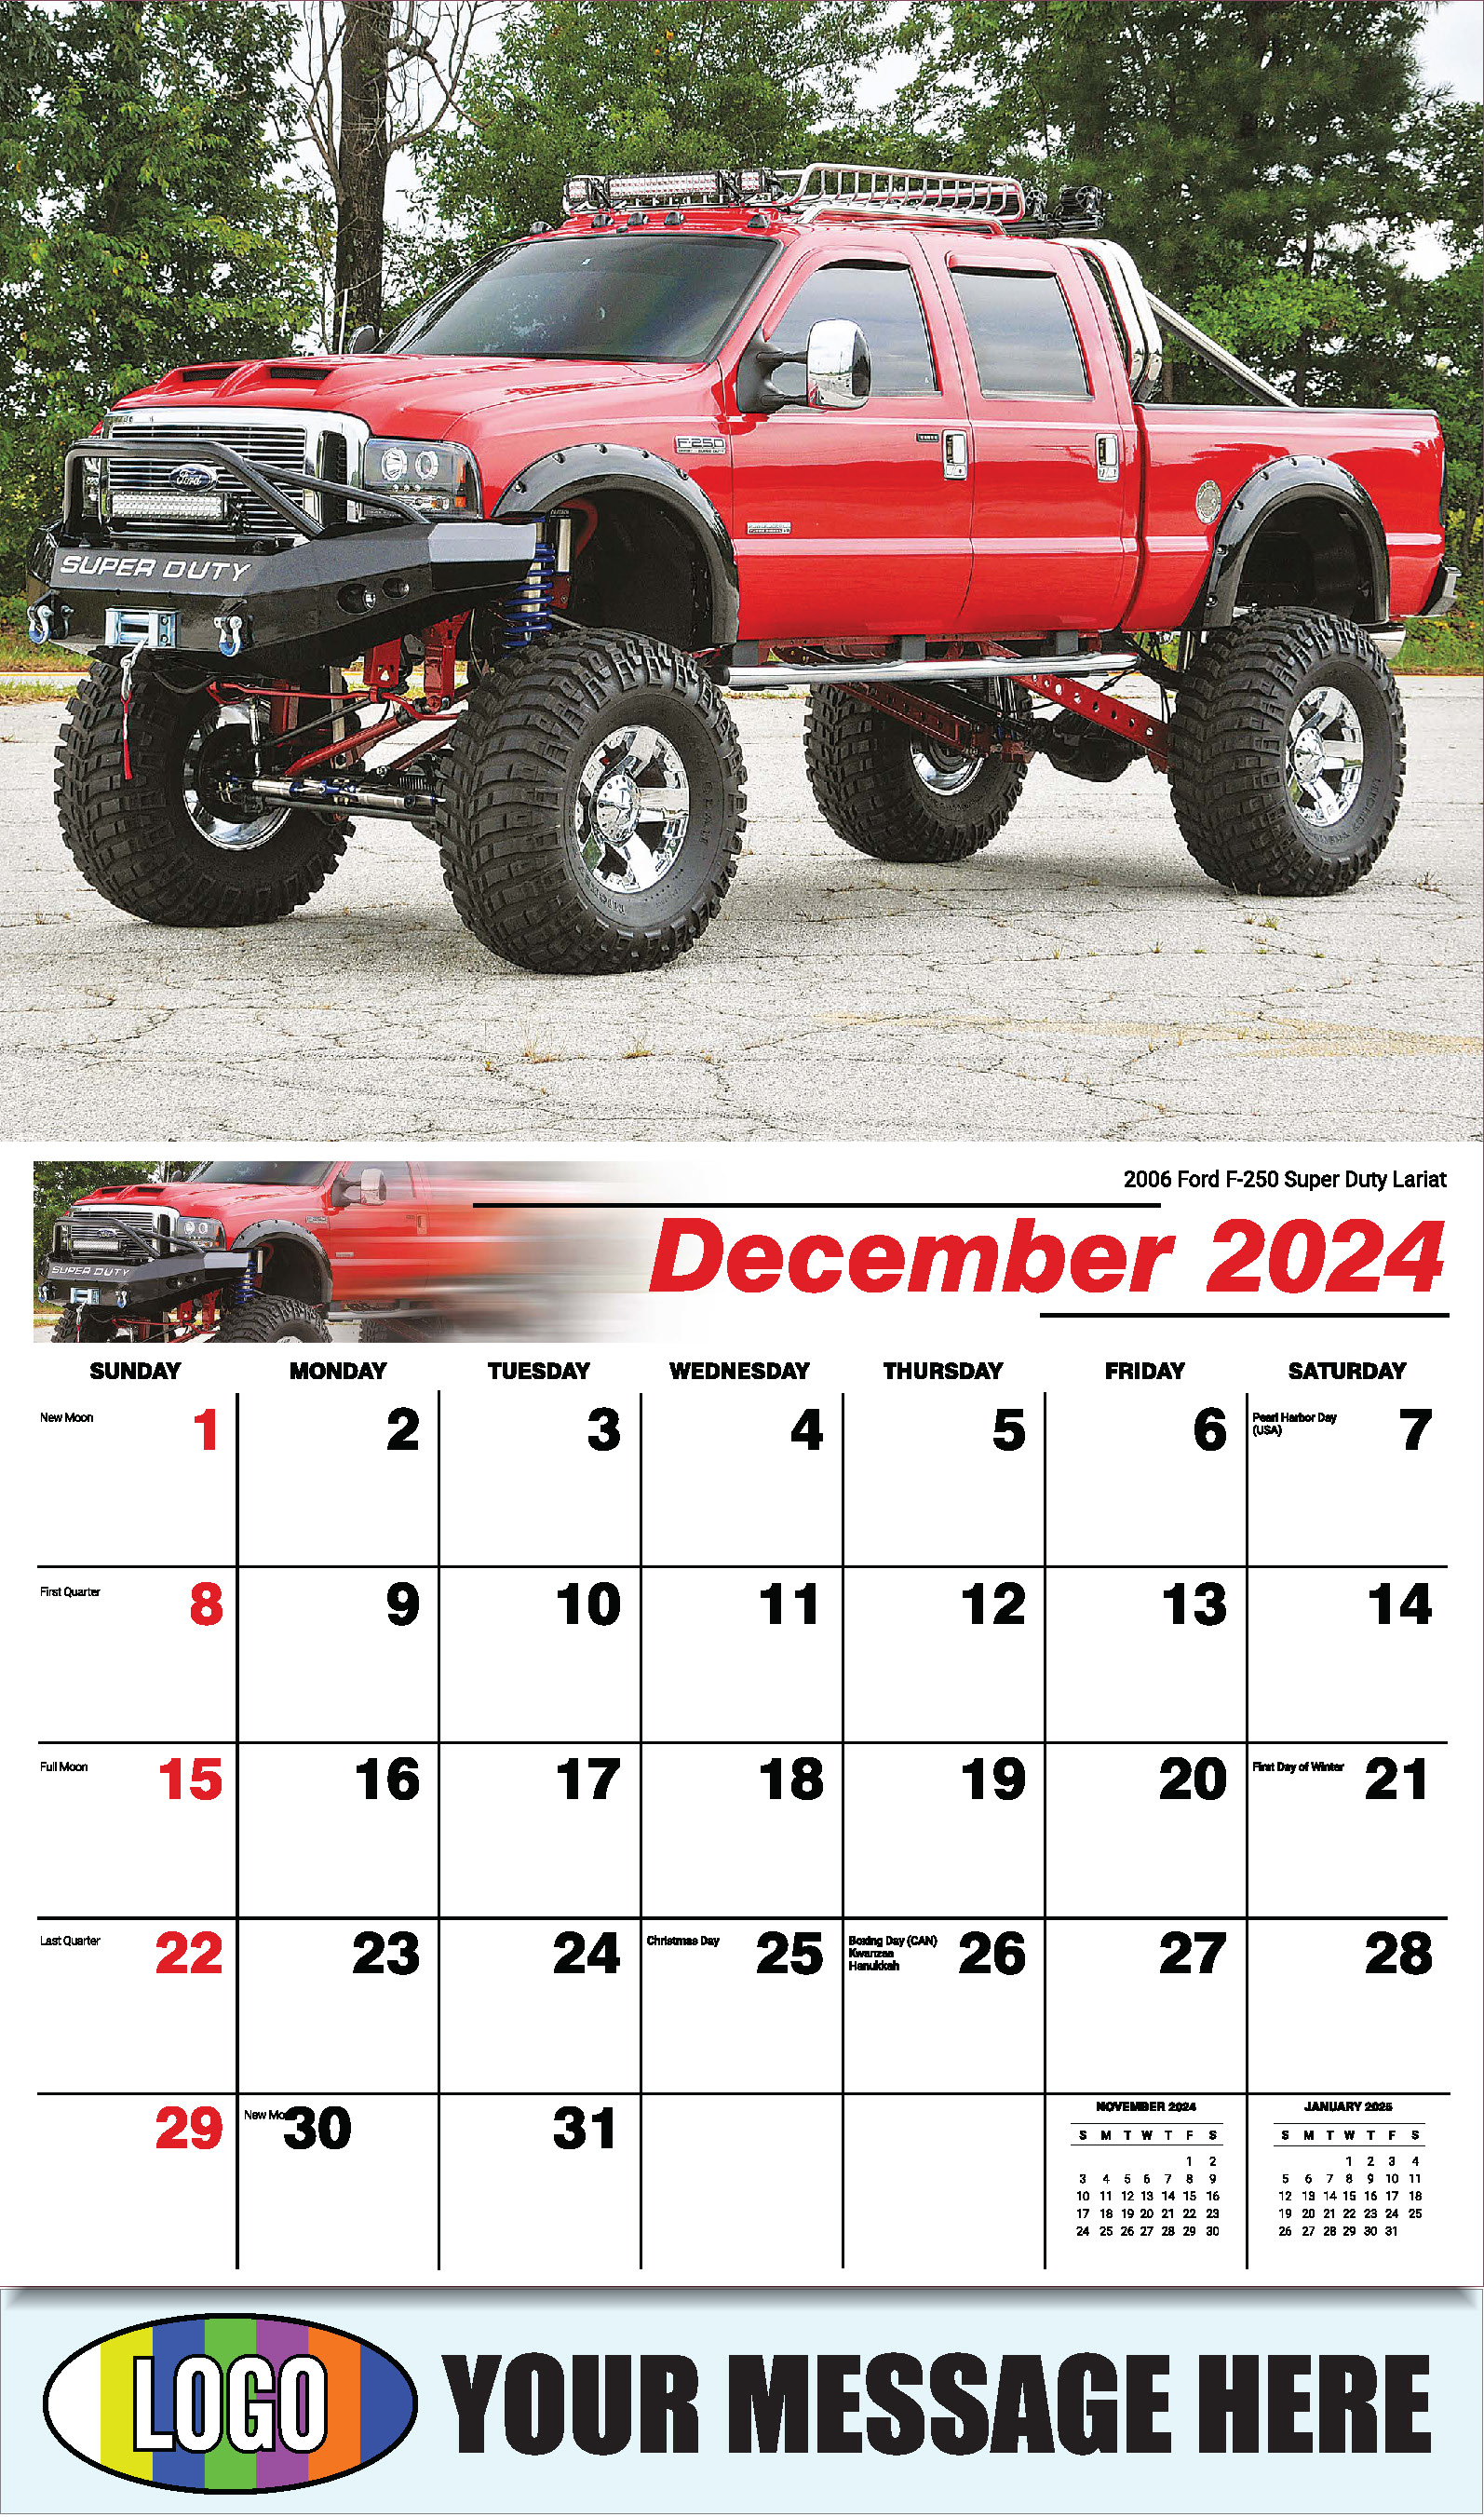 Pumped-Up Pickups 2025 Automotive Business Promo Calendar - December_a